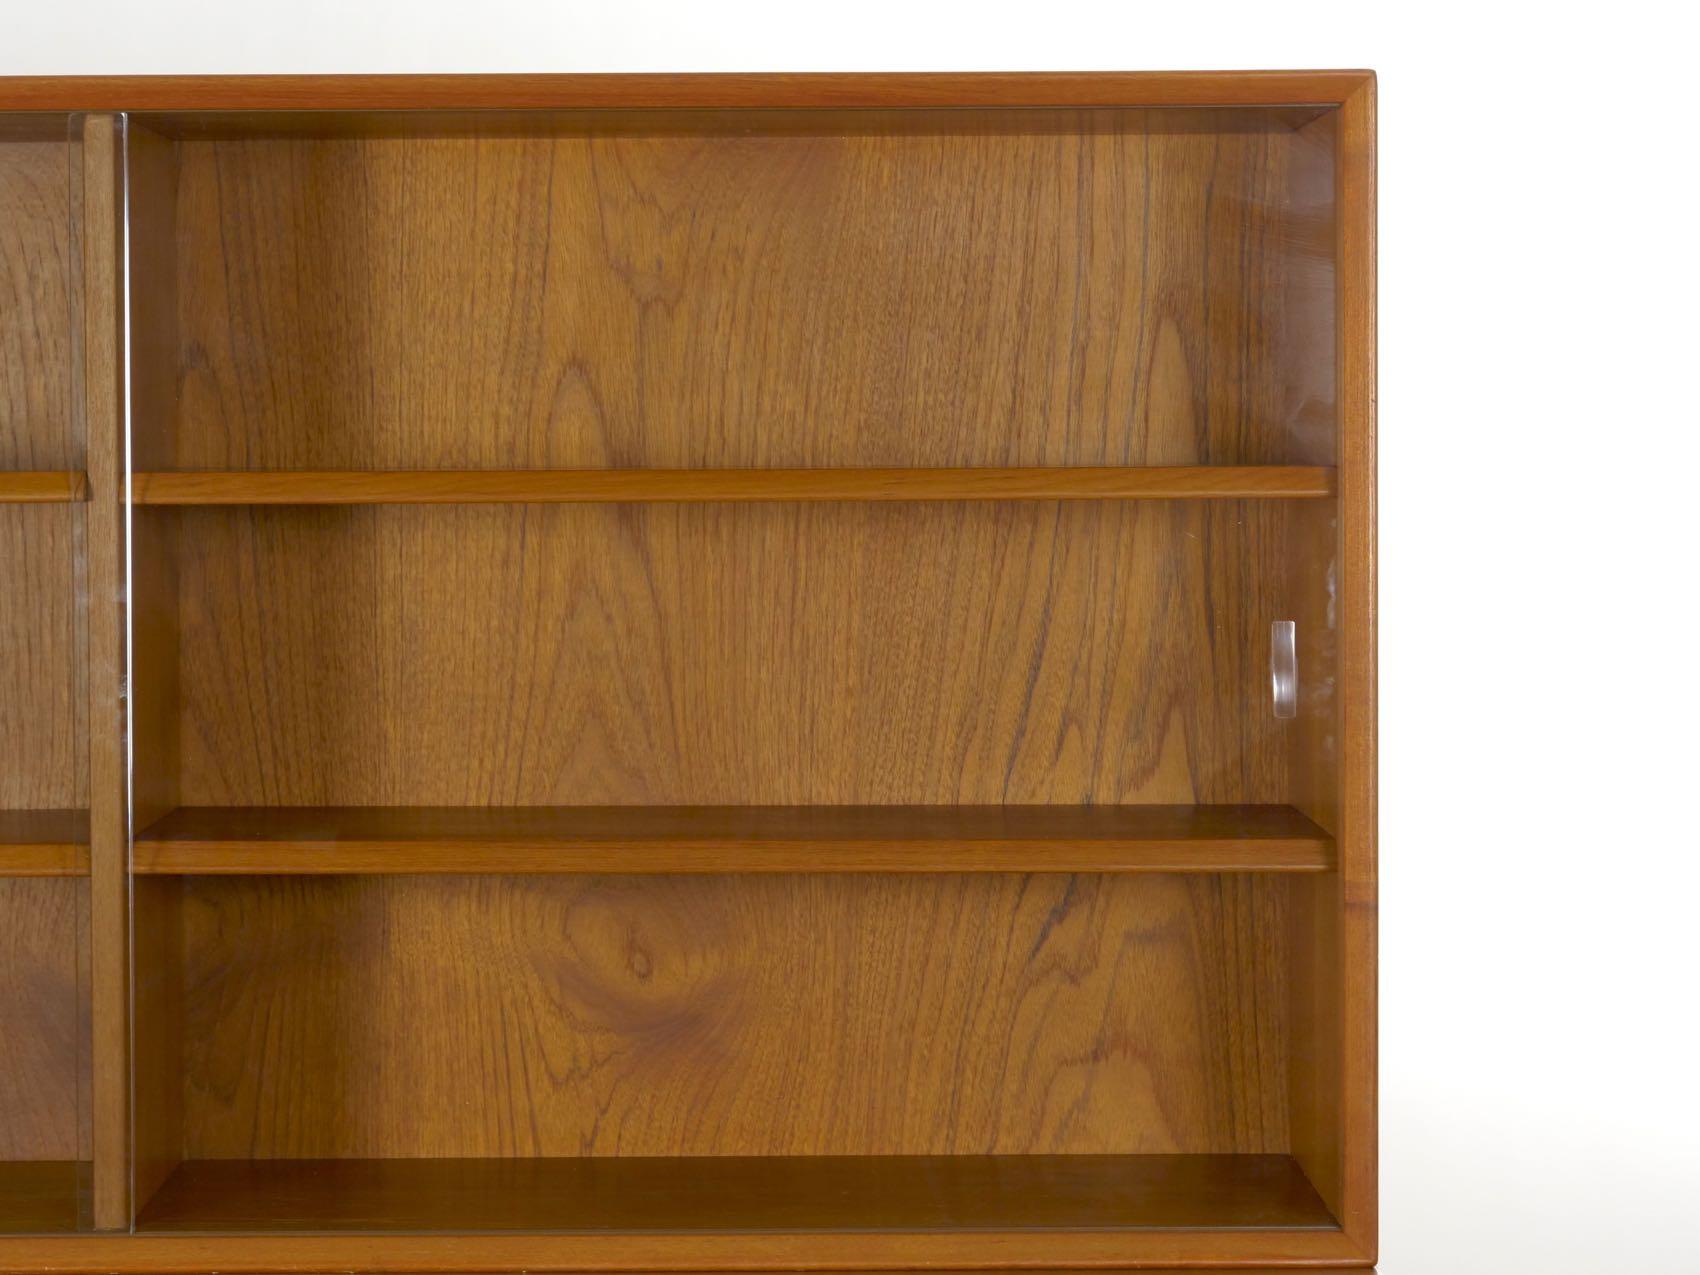 European Scandinavian Mid-Century Modern Teak Bookcase Cabinet, circa 1960-1970